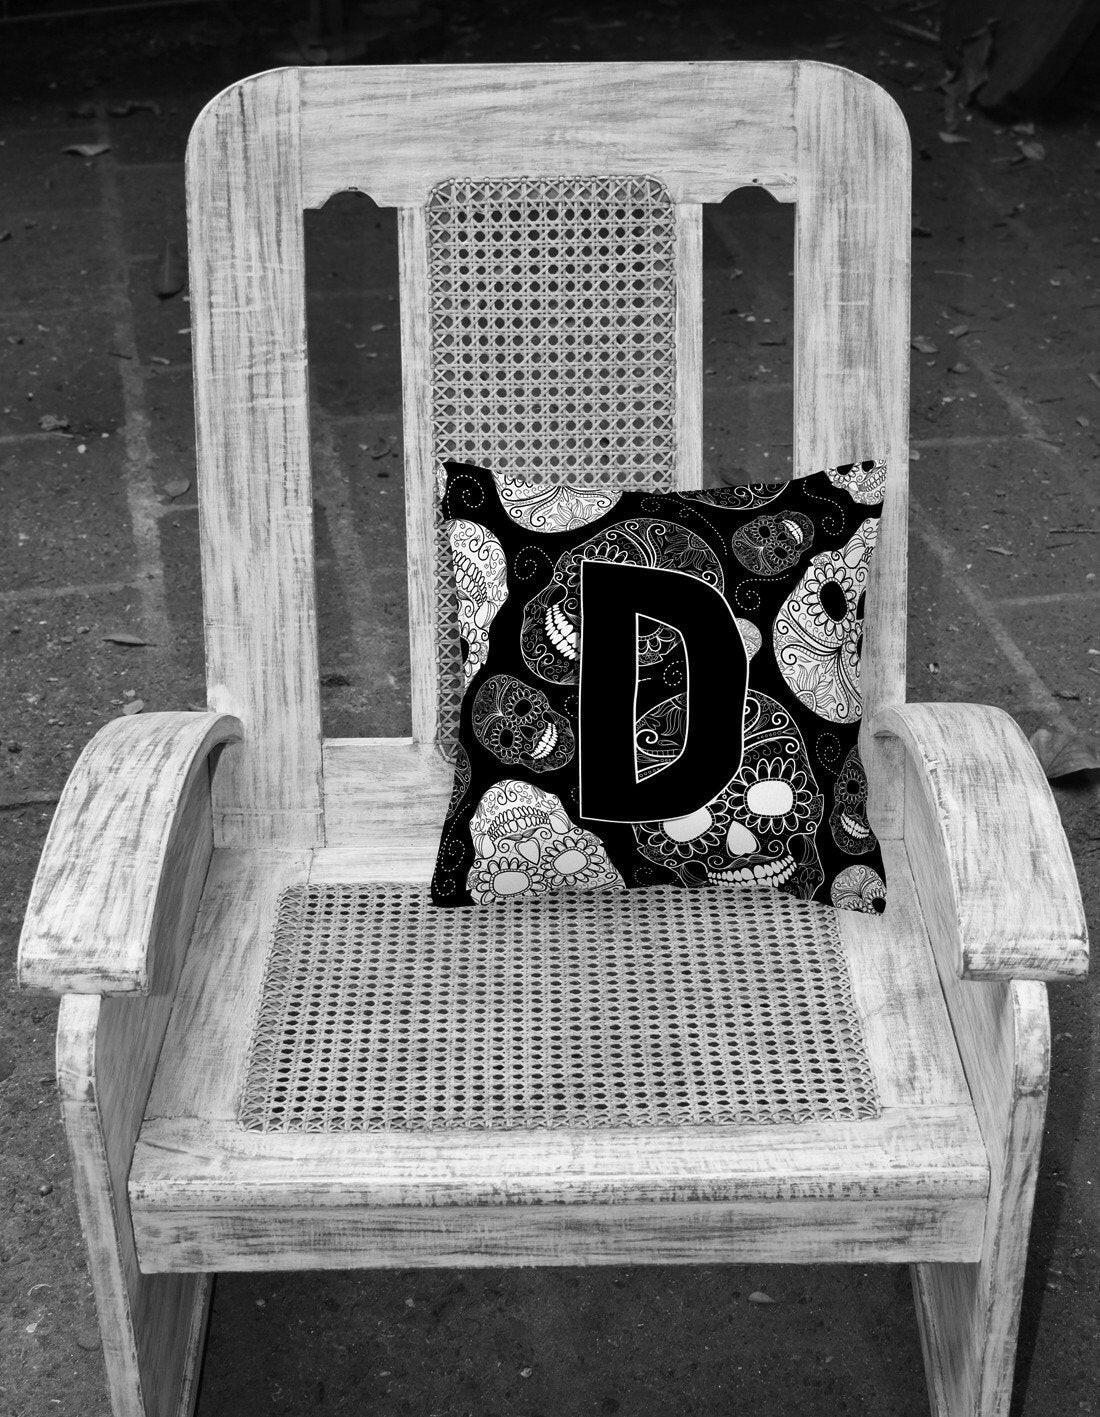 Letter D Day of the Dead Skulls Black Canvas Fabric Decorative Pillow CJ2008-DPW1414 by Caroline's Treasures